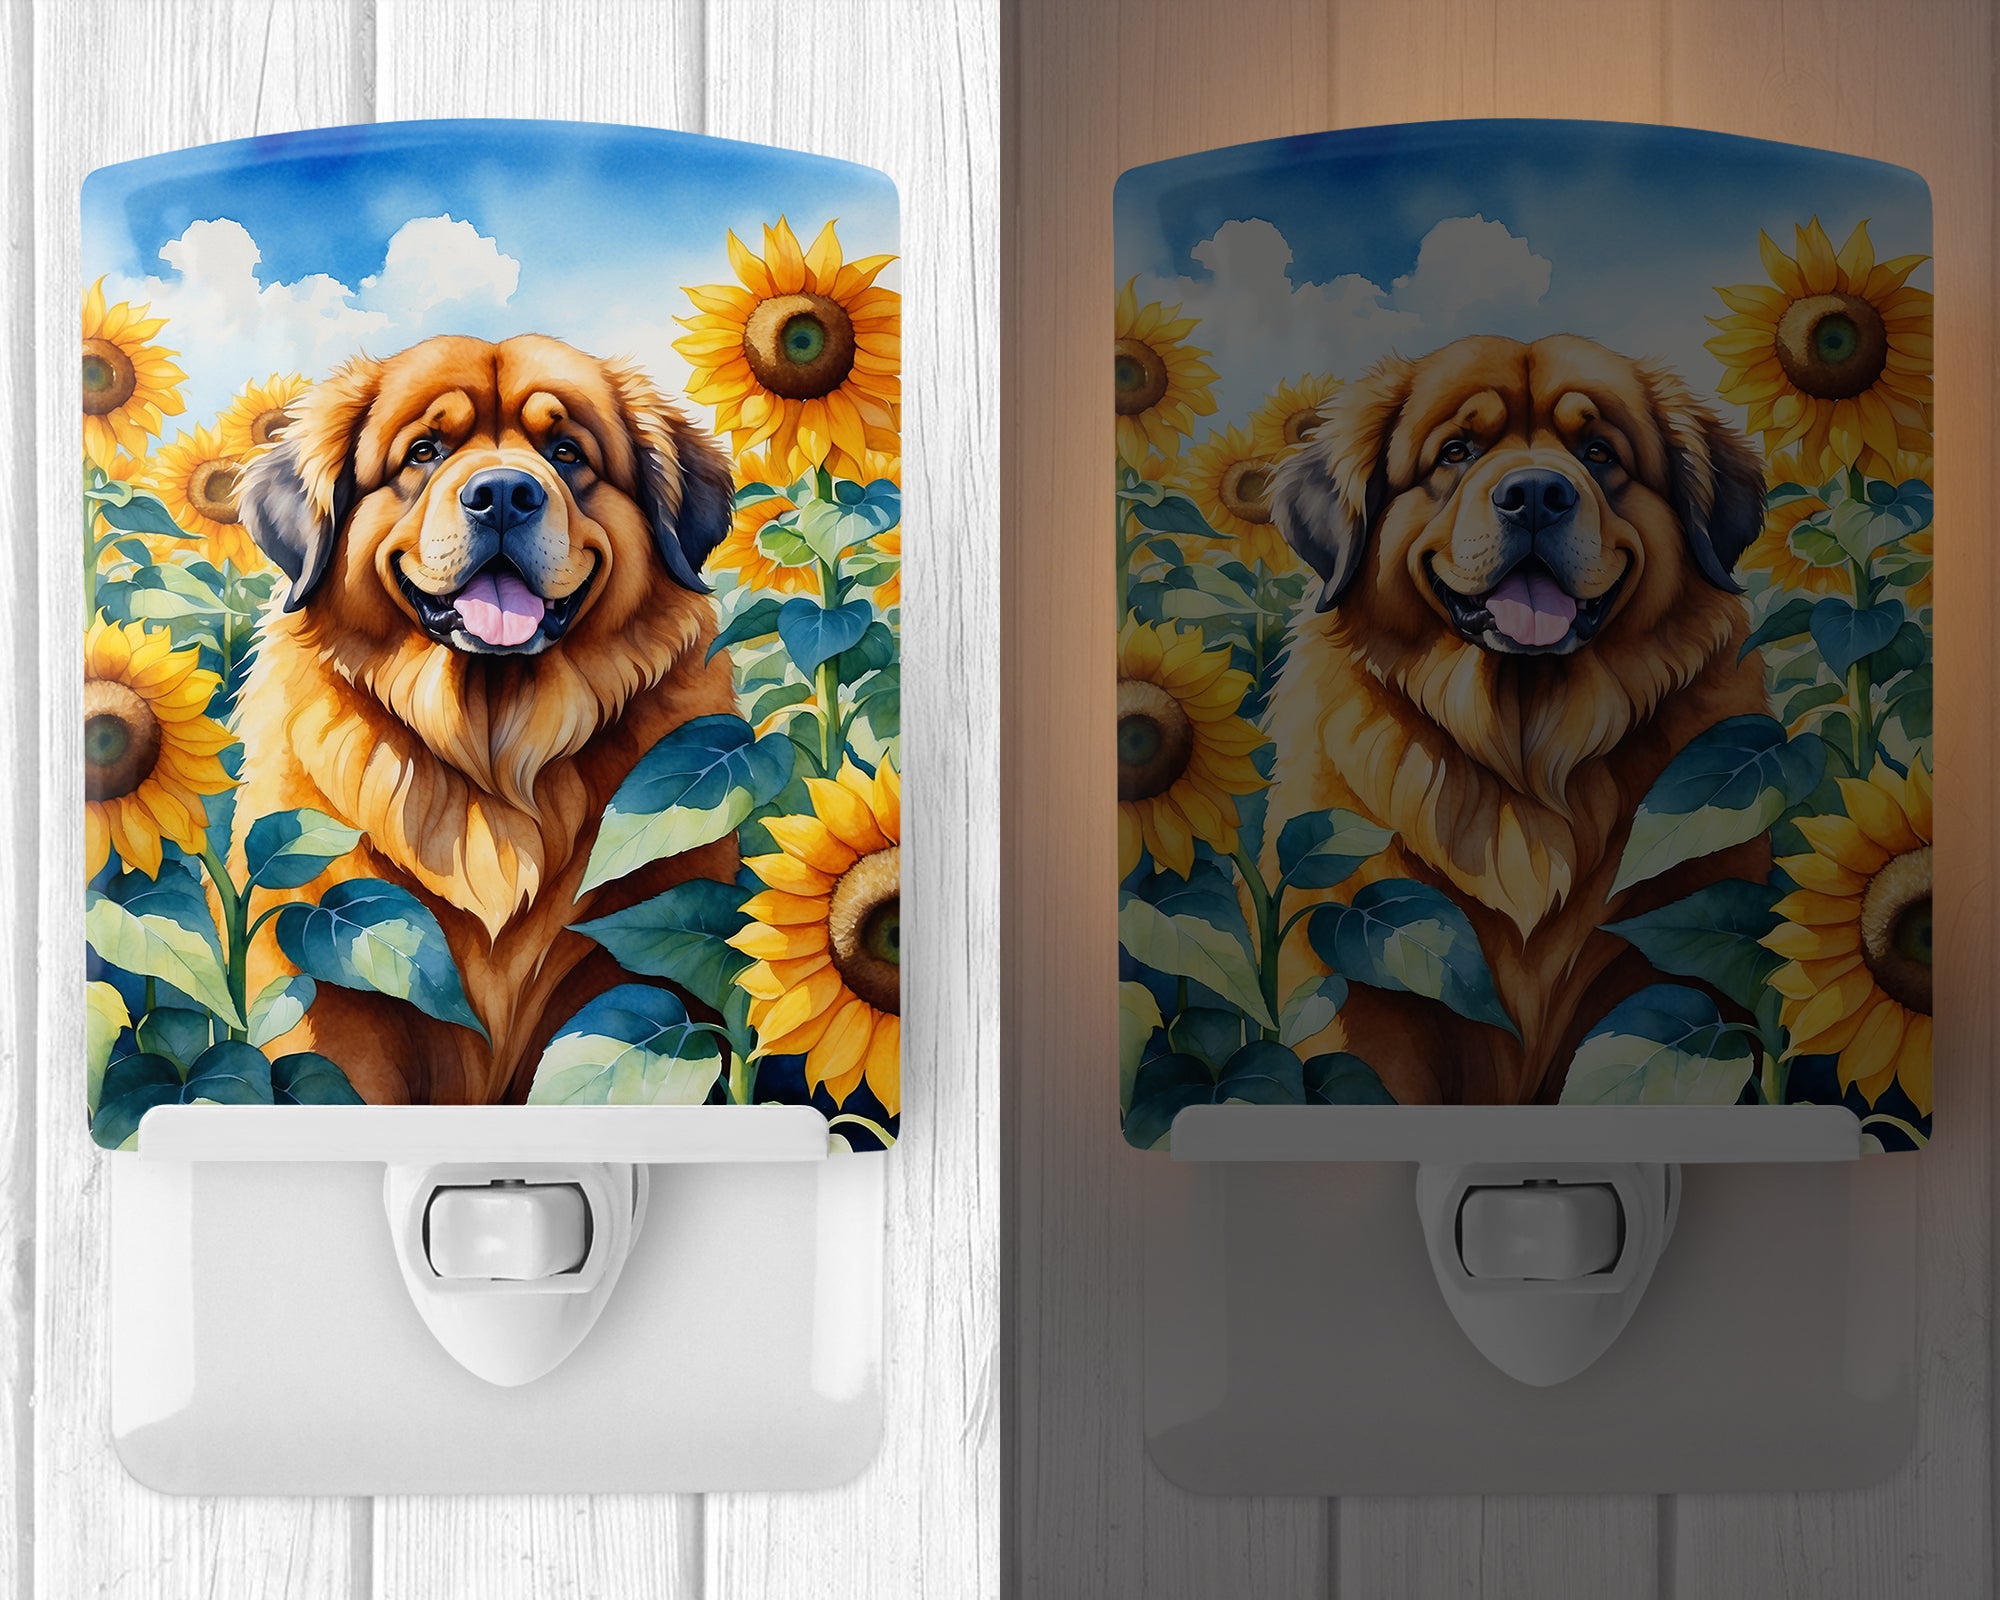 Buy this Tibetan Mastiff in Sunflowers Ceramic Night Light